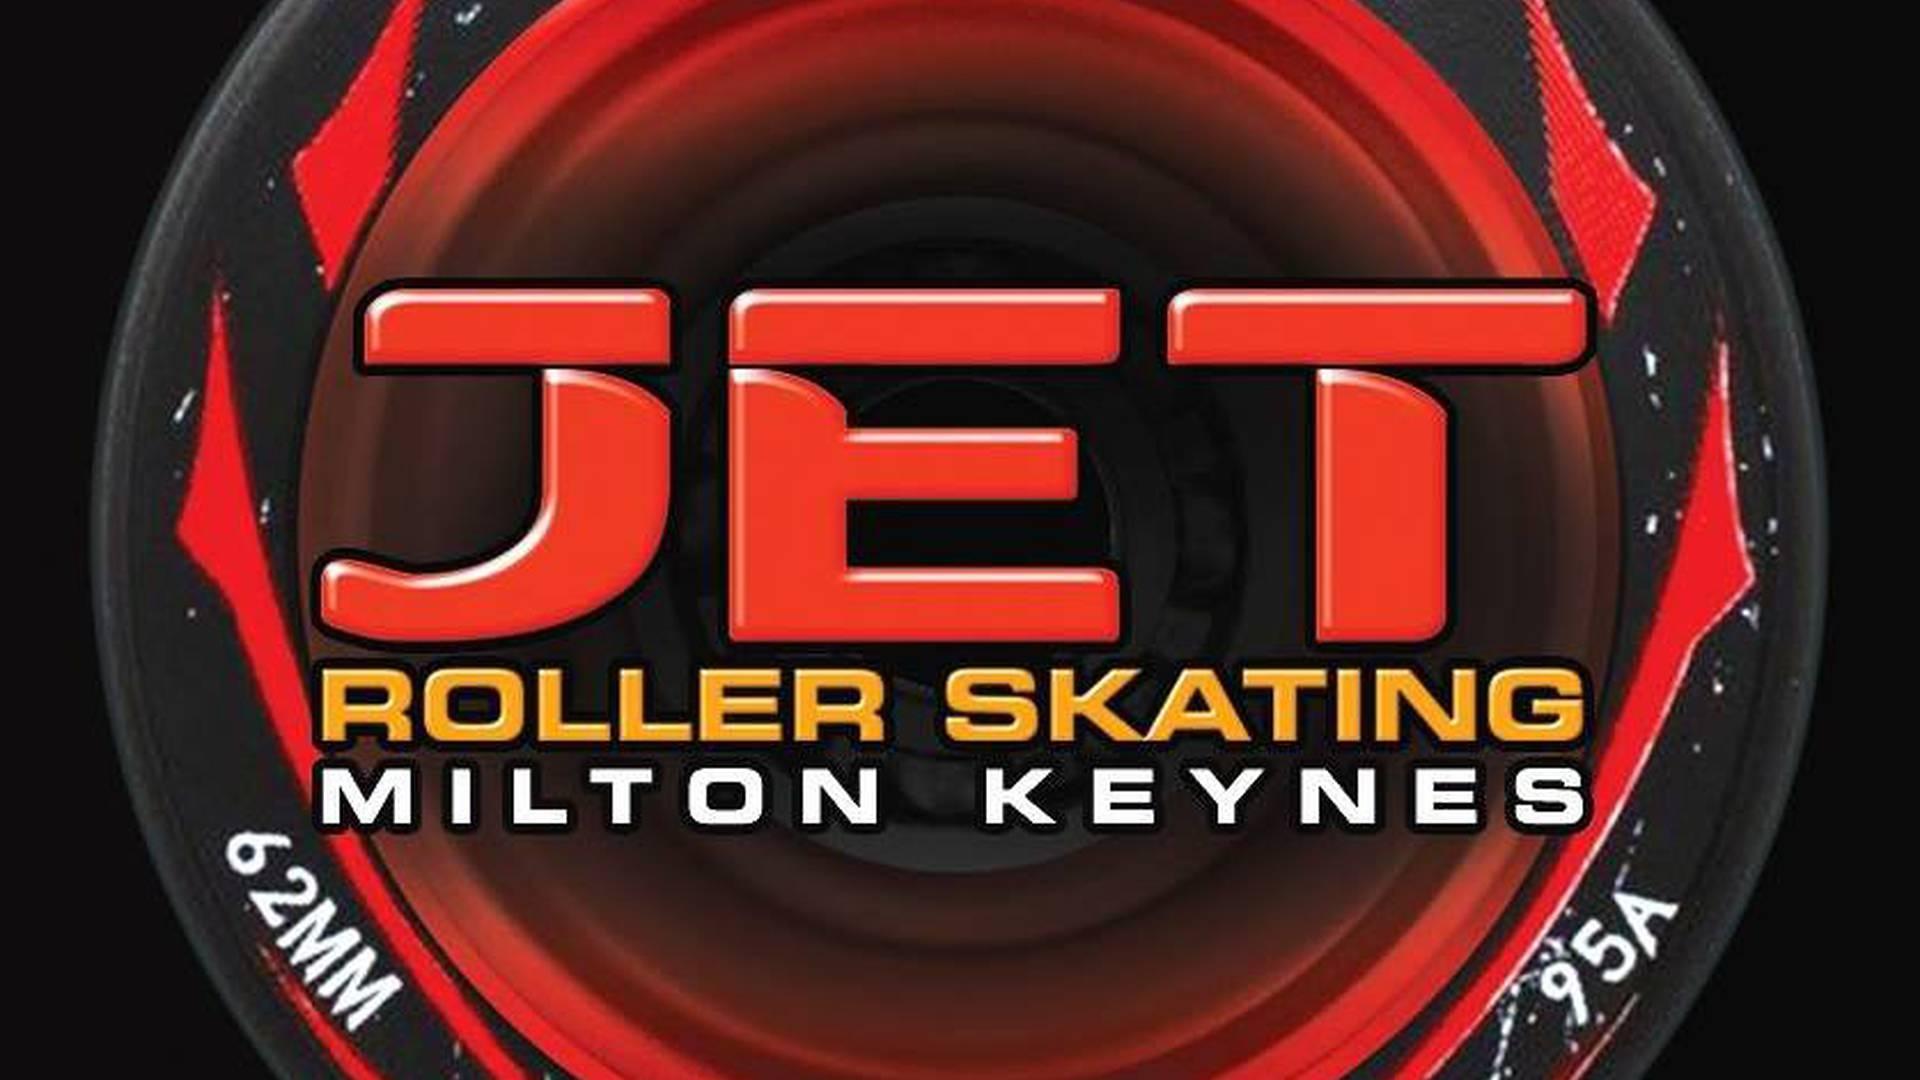 Jet roller skating Milton Keynes photo